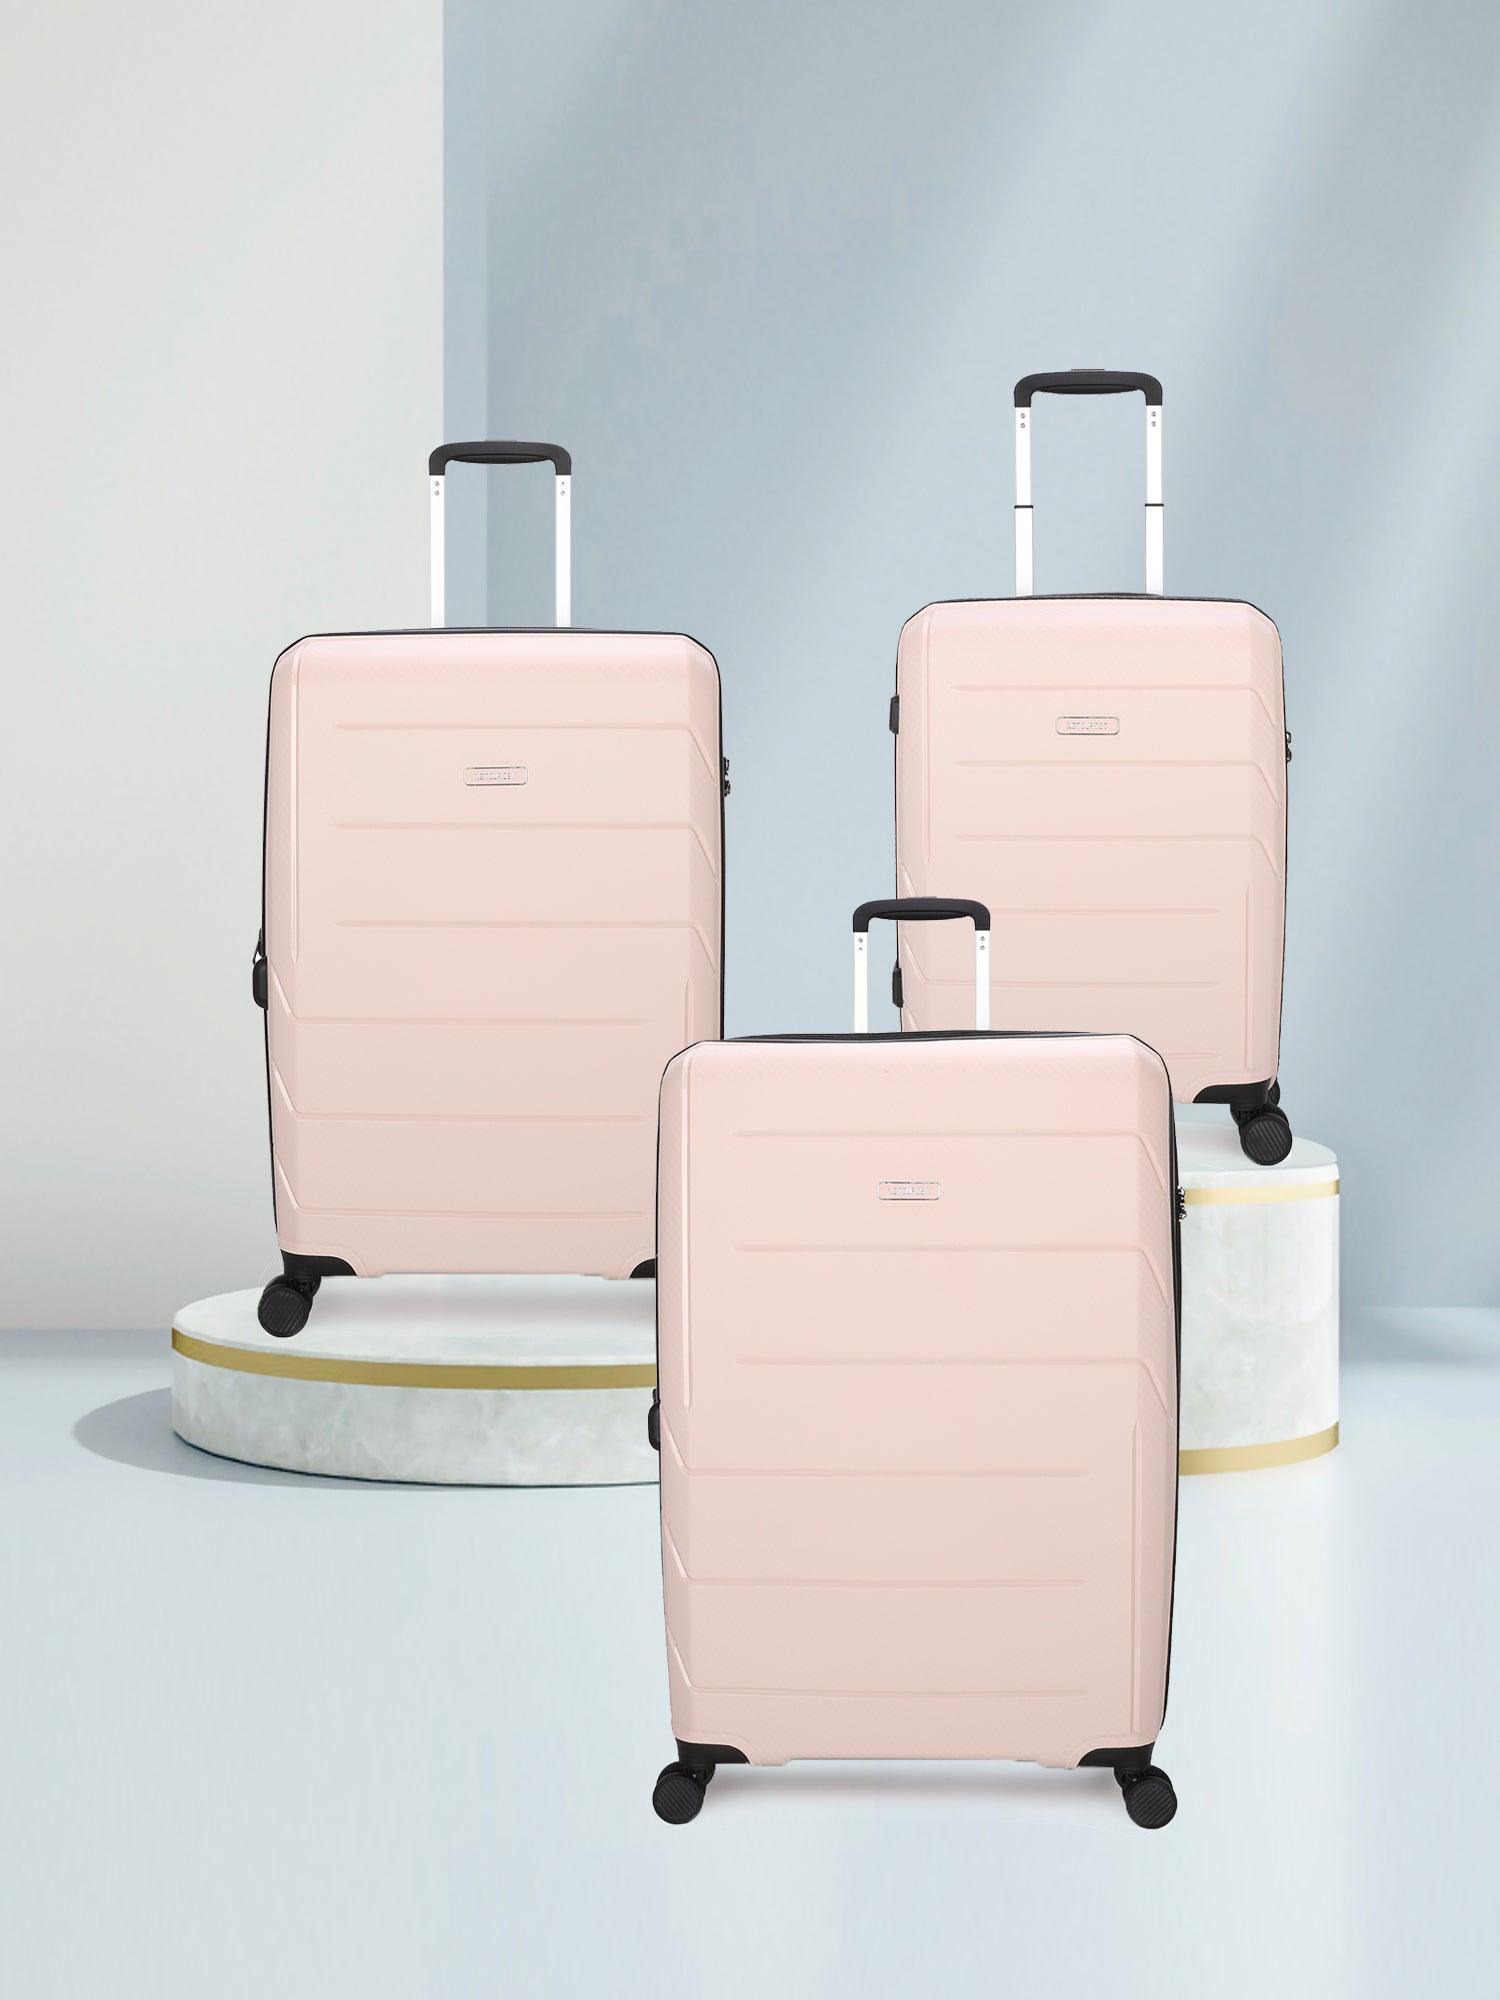 NZTourist Ultra-Light Traveller 69cm Suitcase - Light Pink - San Michelle Bags suitcase nz